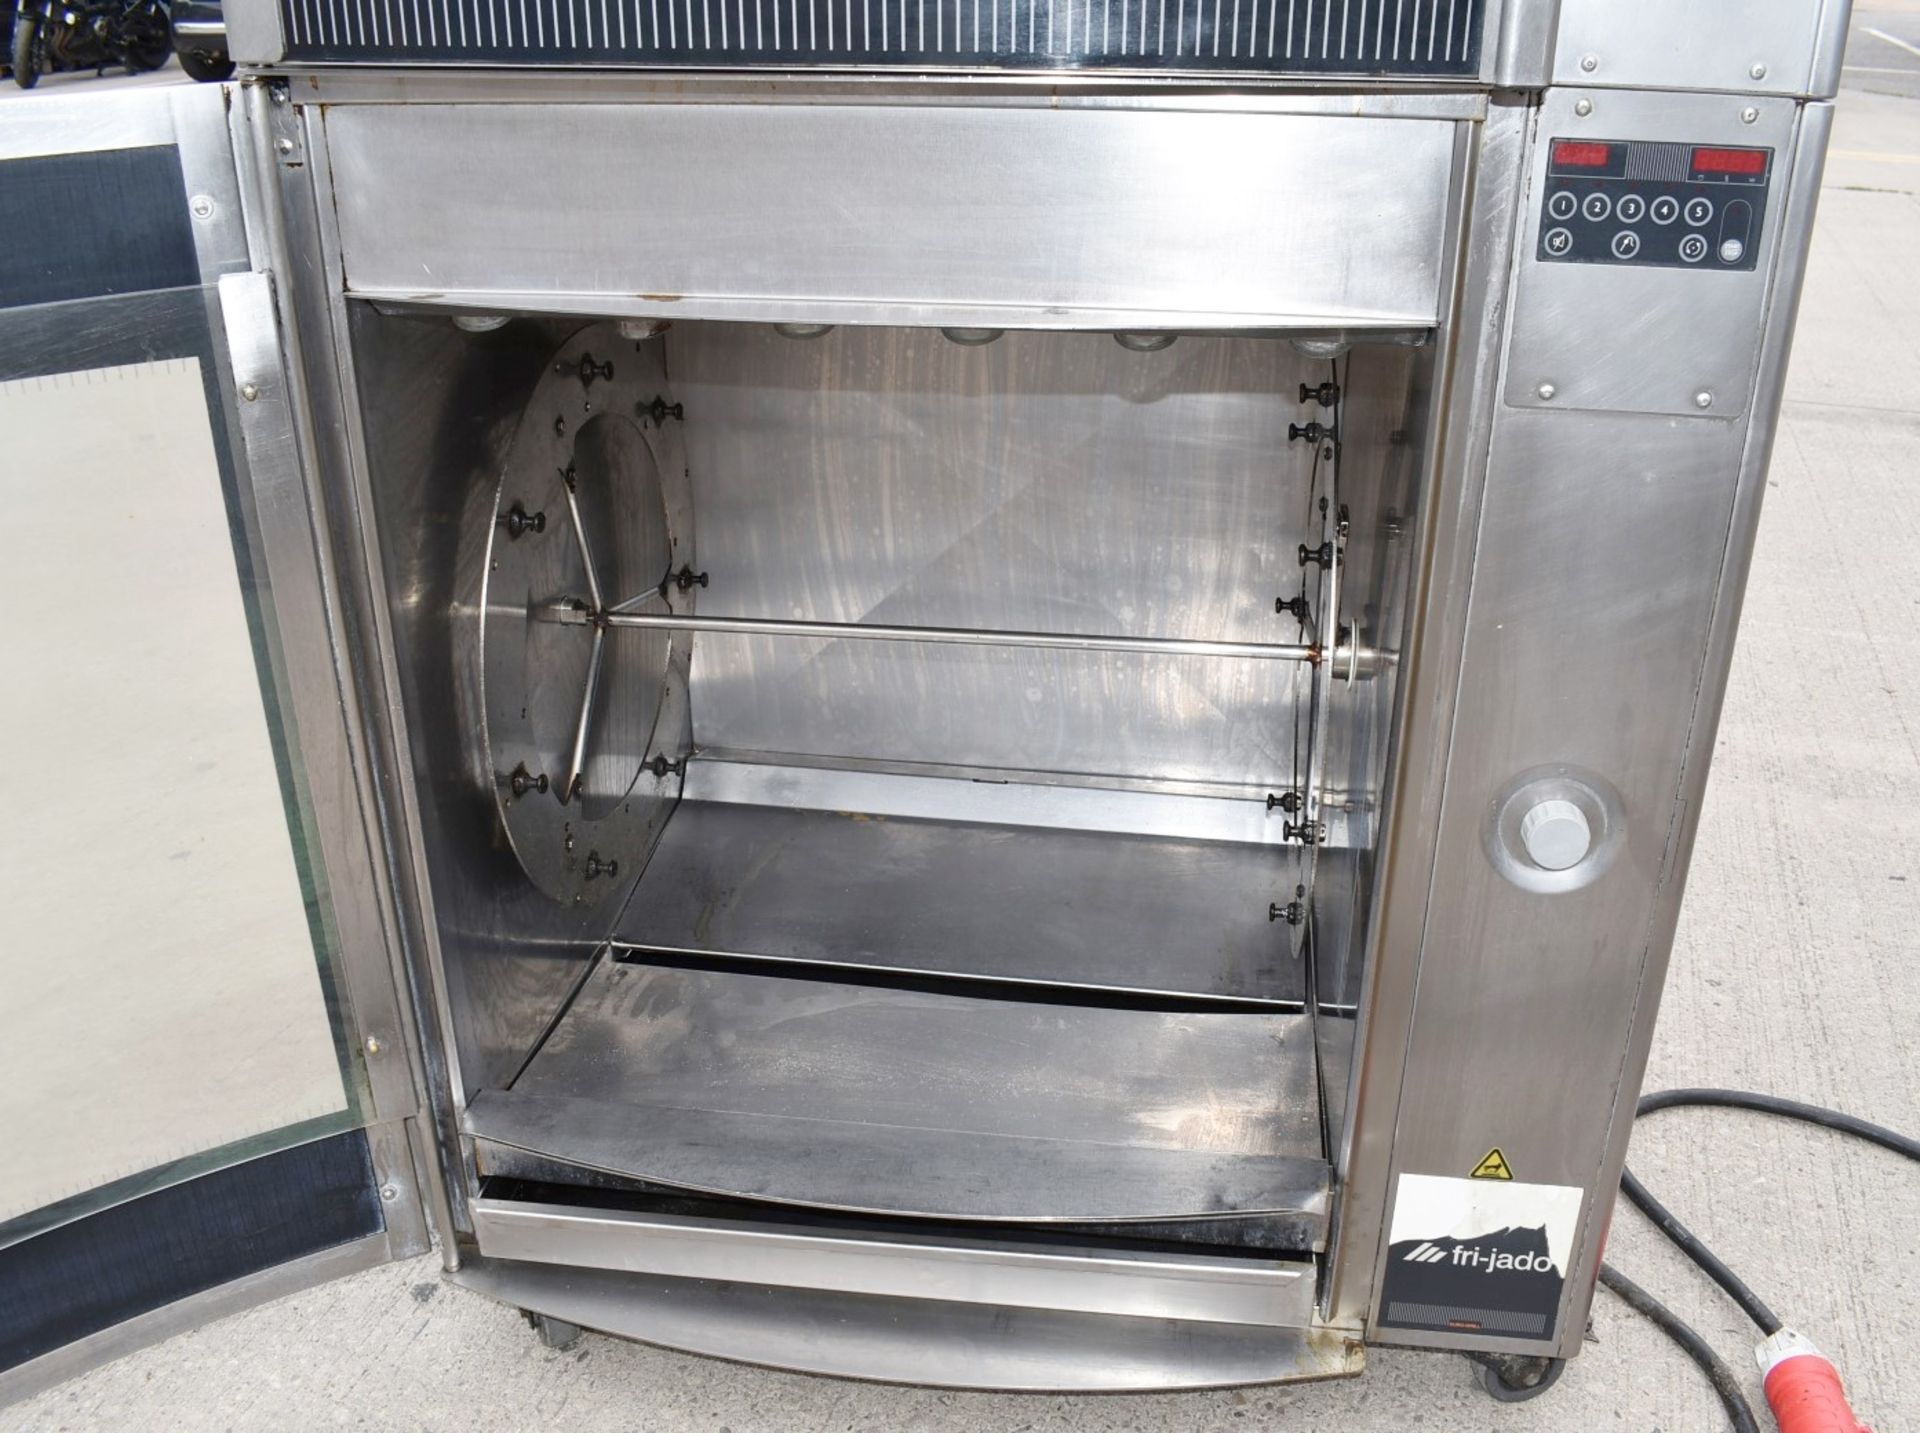 1 x Fri-Jado Rotisserie Chicken Double Oven - 3 Phase Power - Ref: JON231 - CL232 - Location: - Image 10 of 16